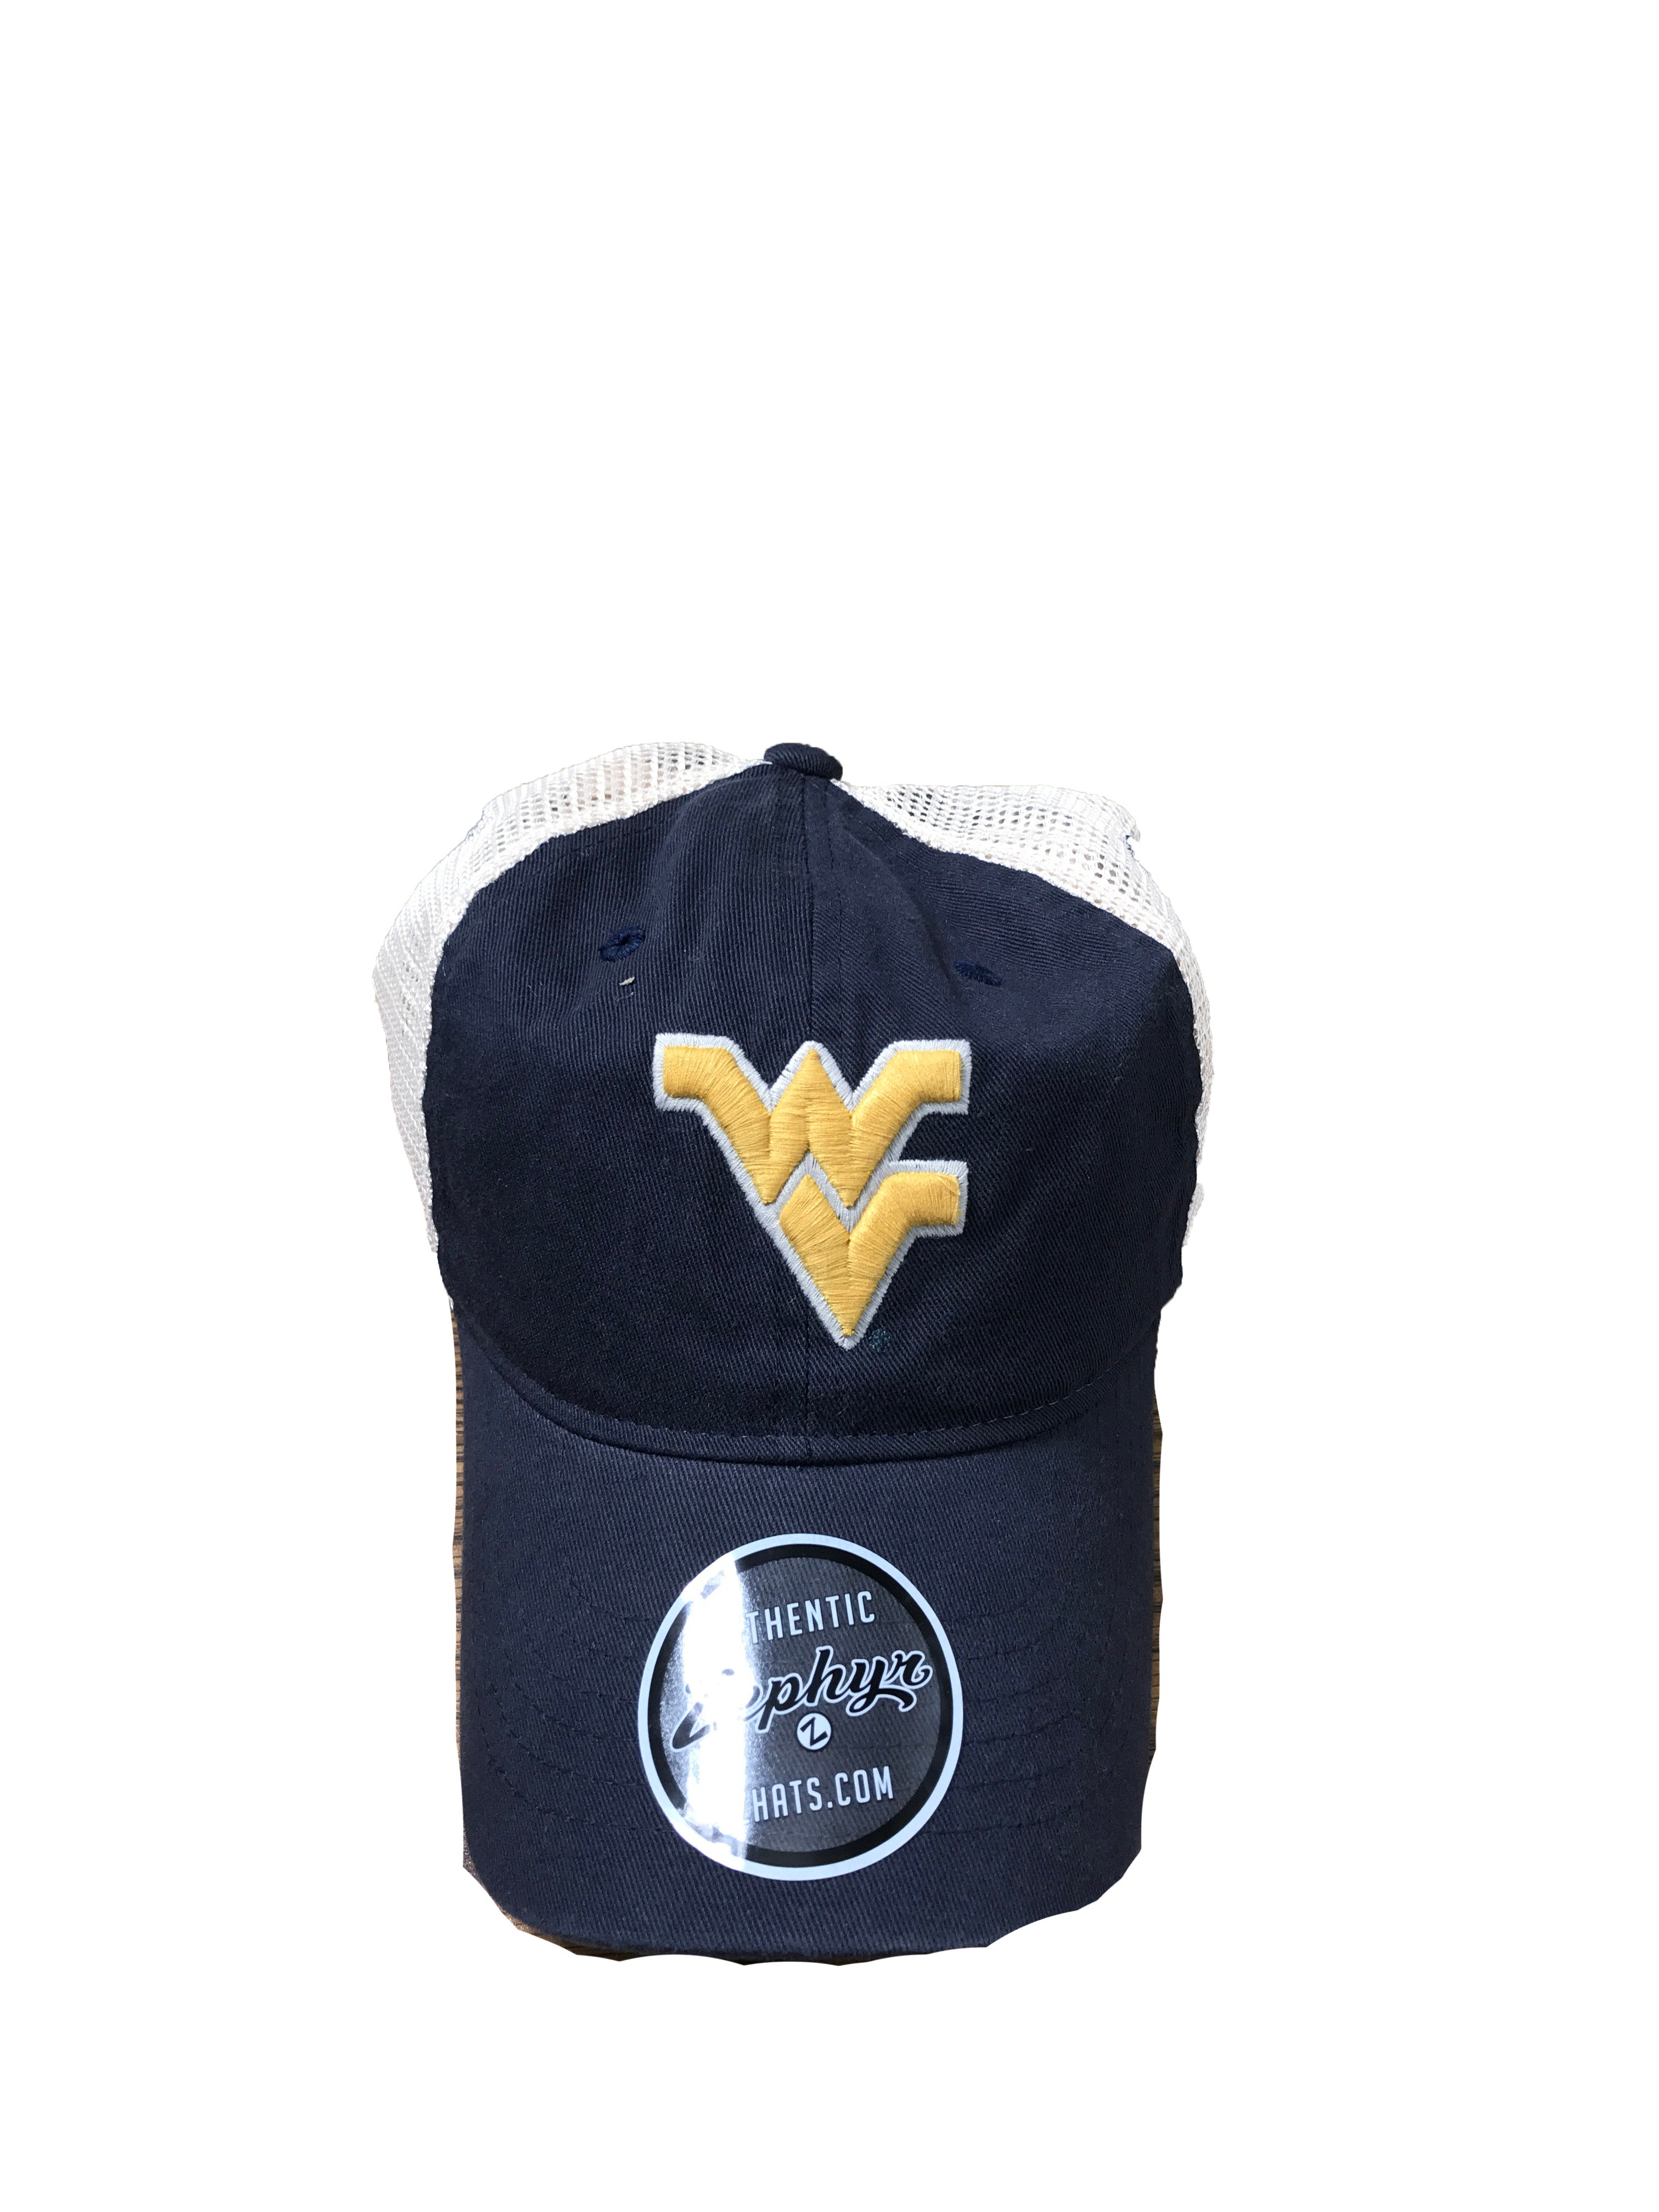 Zephyr "WV" University Initial Mesh Hat